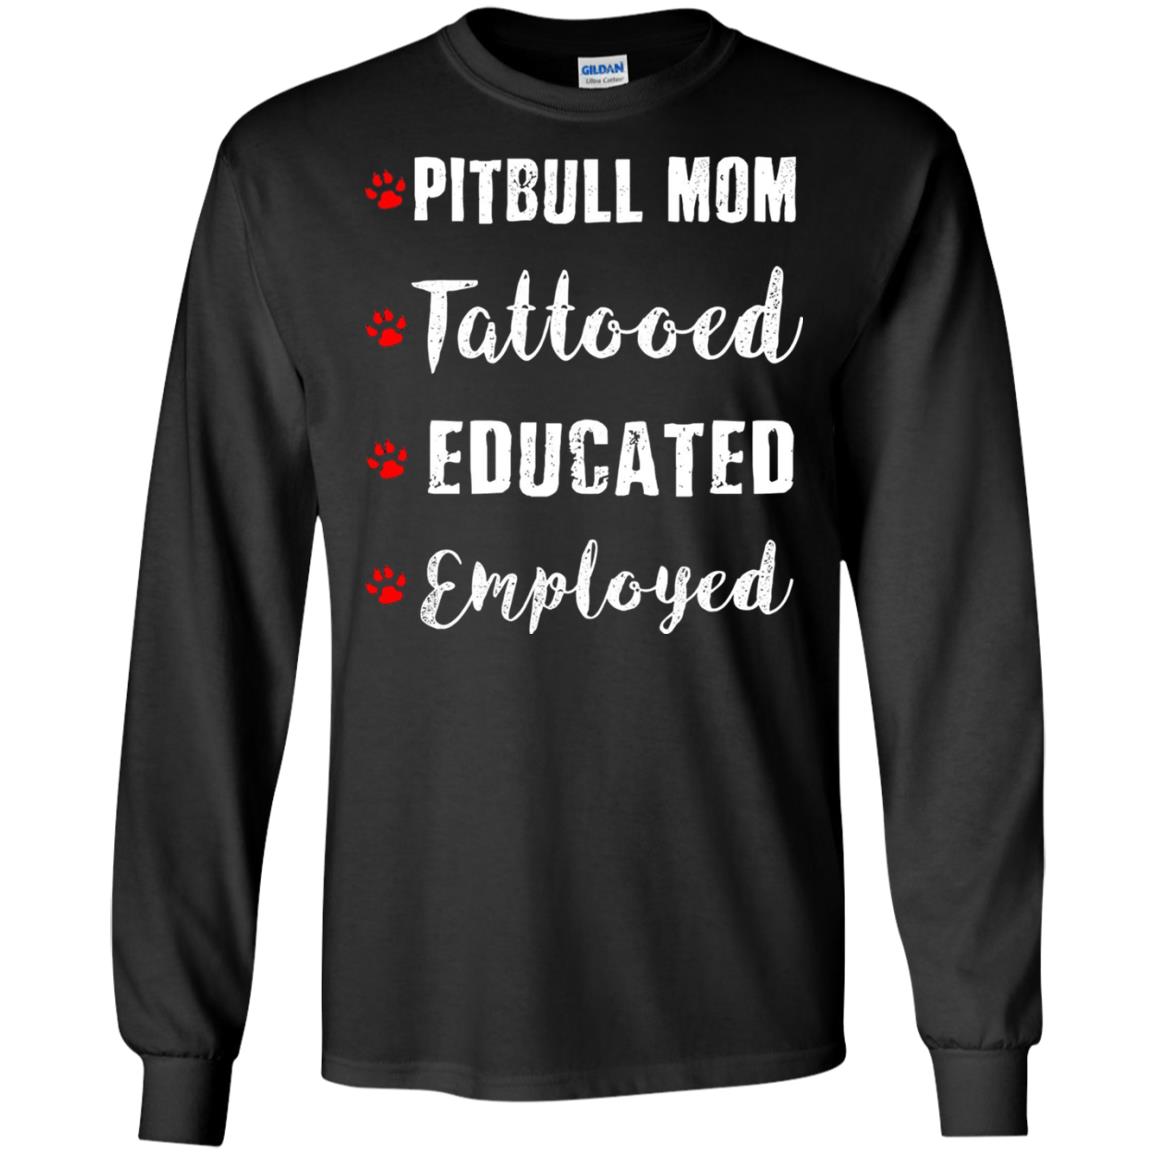 Pitbull Mom Tatooed Educated Employed Shirt